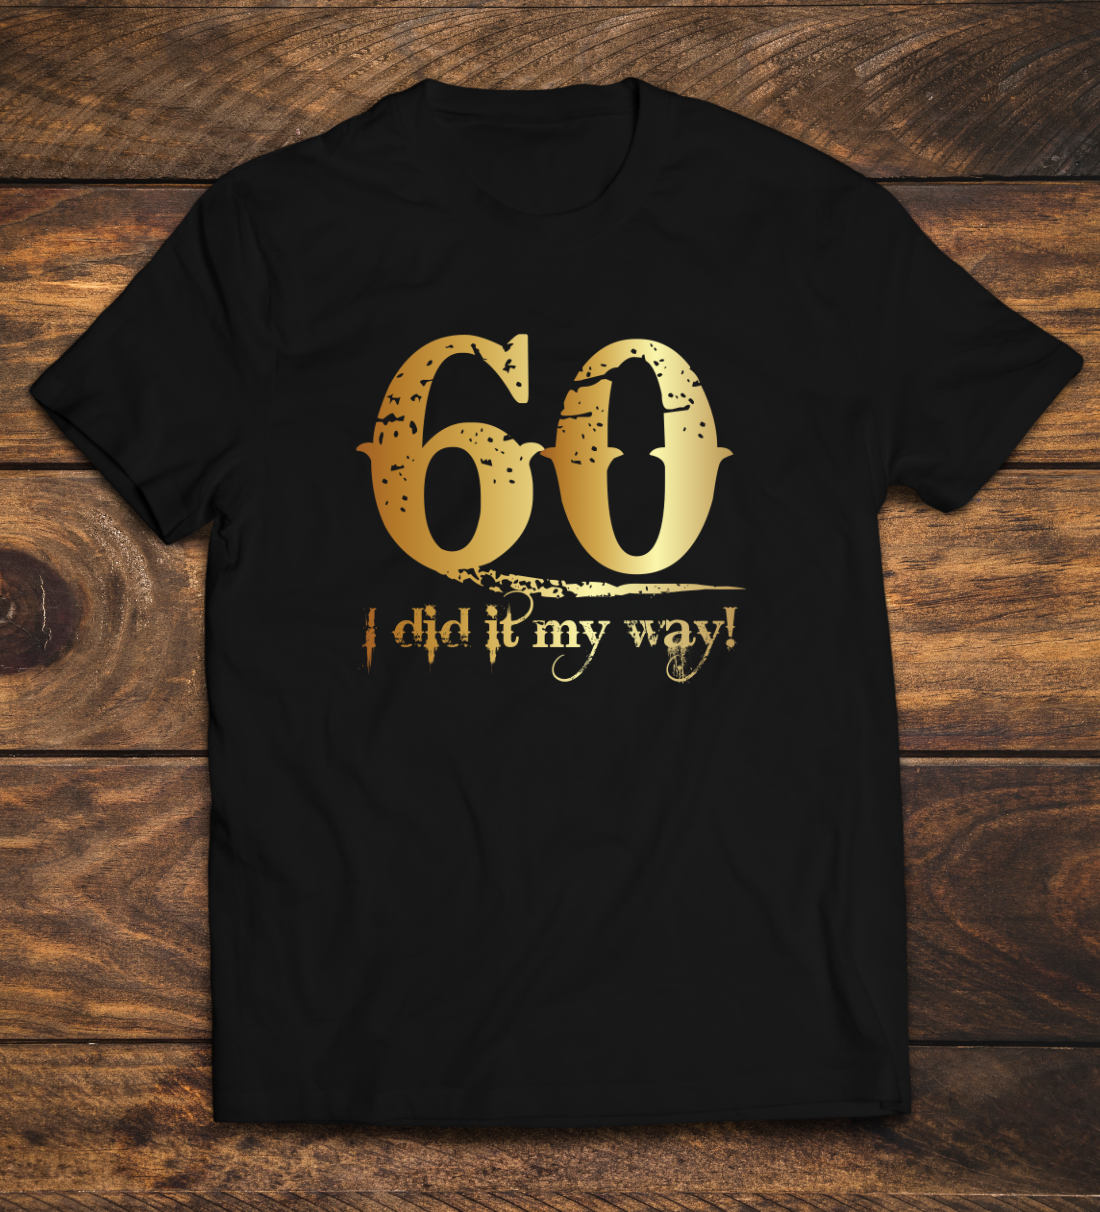 T-Shirt zum 60. Geburtstags - I did it my way